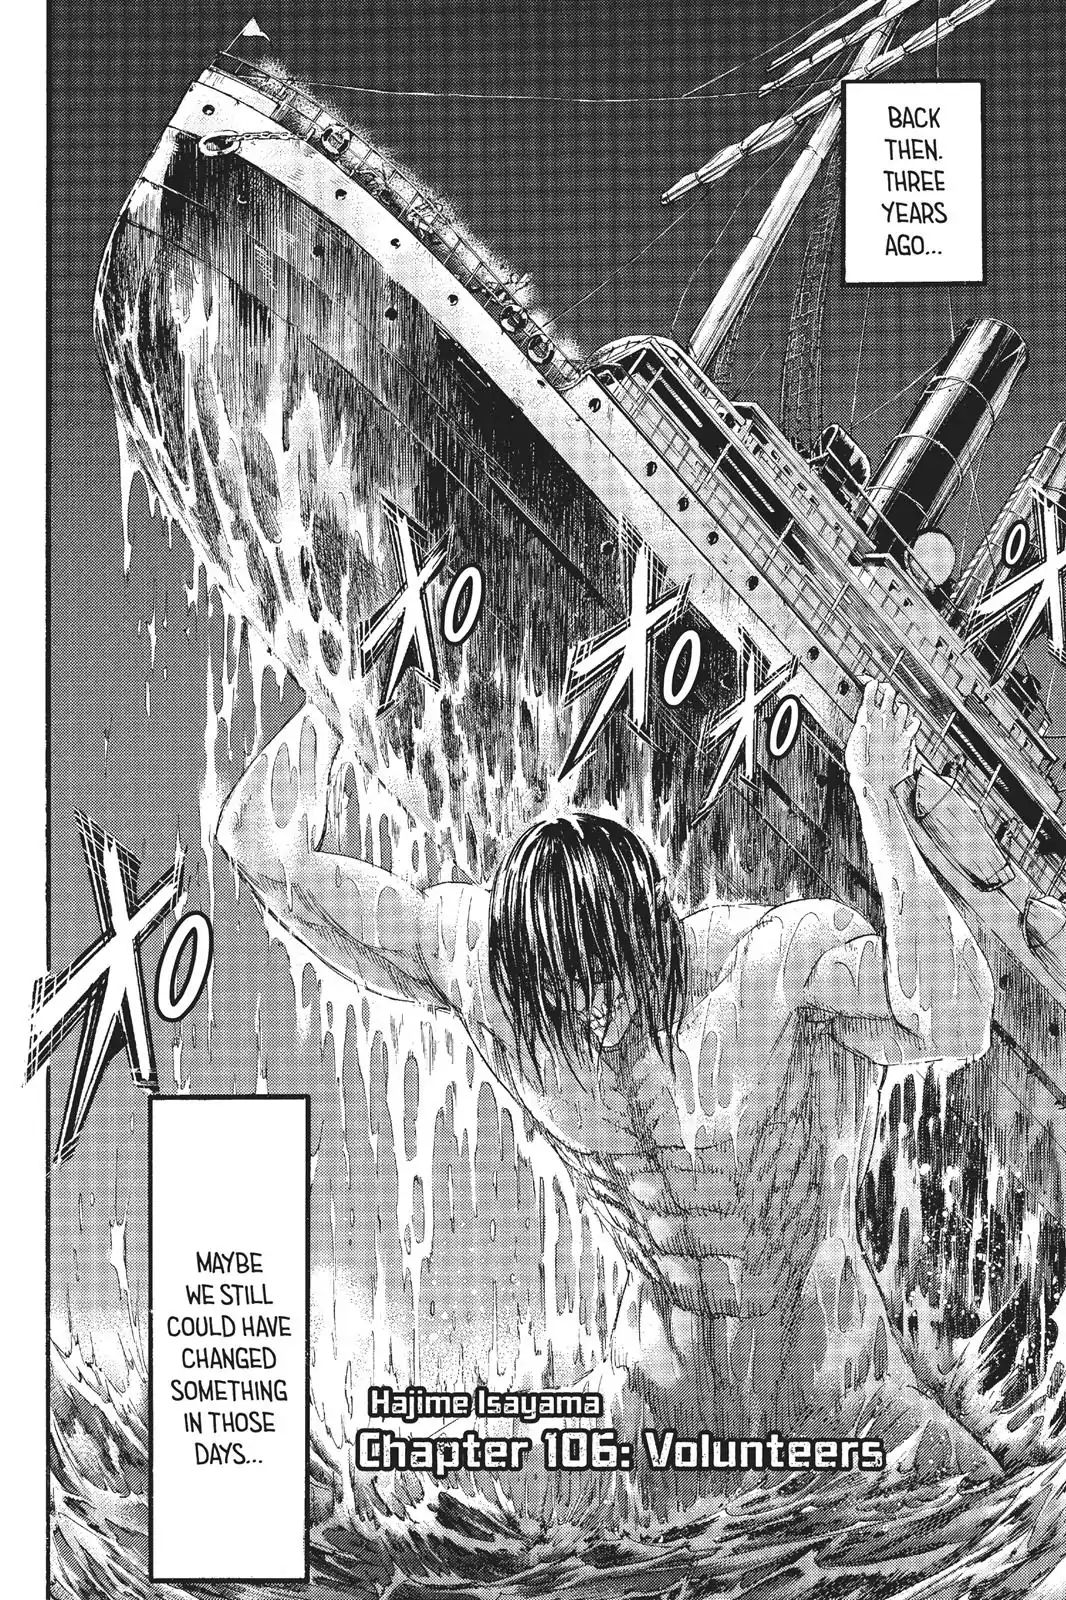 ttack on titan manga 139,attack on titan 139,attack on titan chapter 139,attack on titan final chapter,attack on titan manga ending